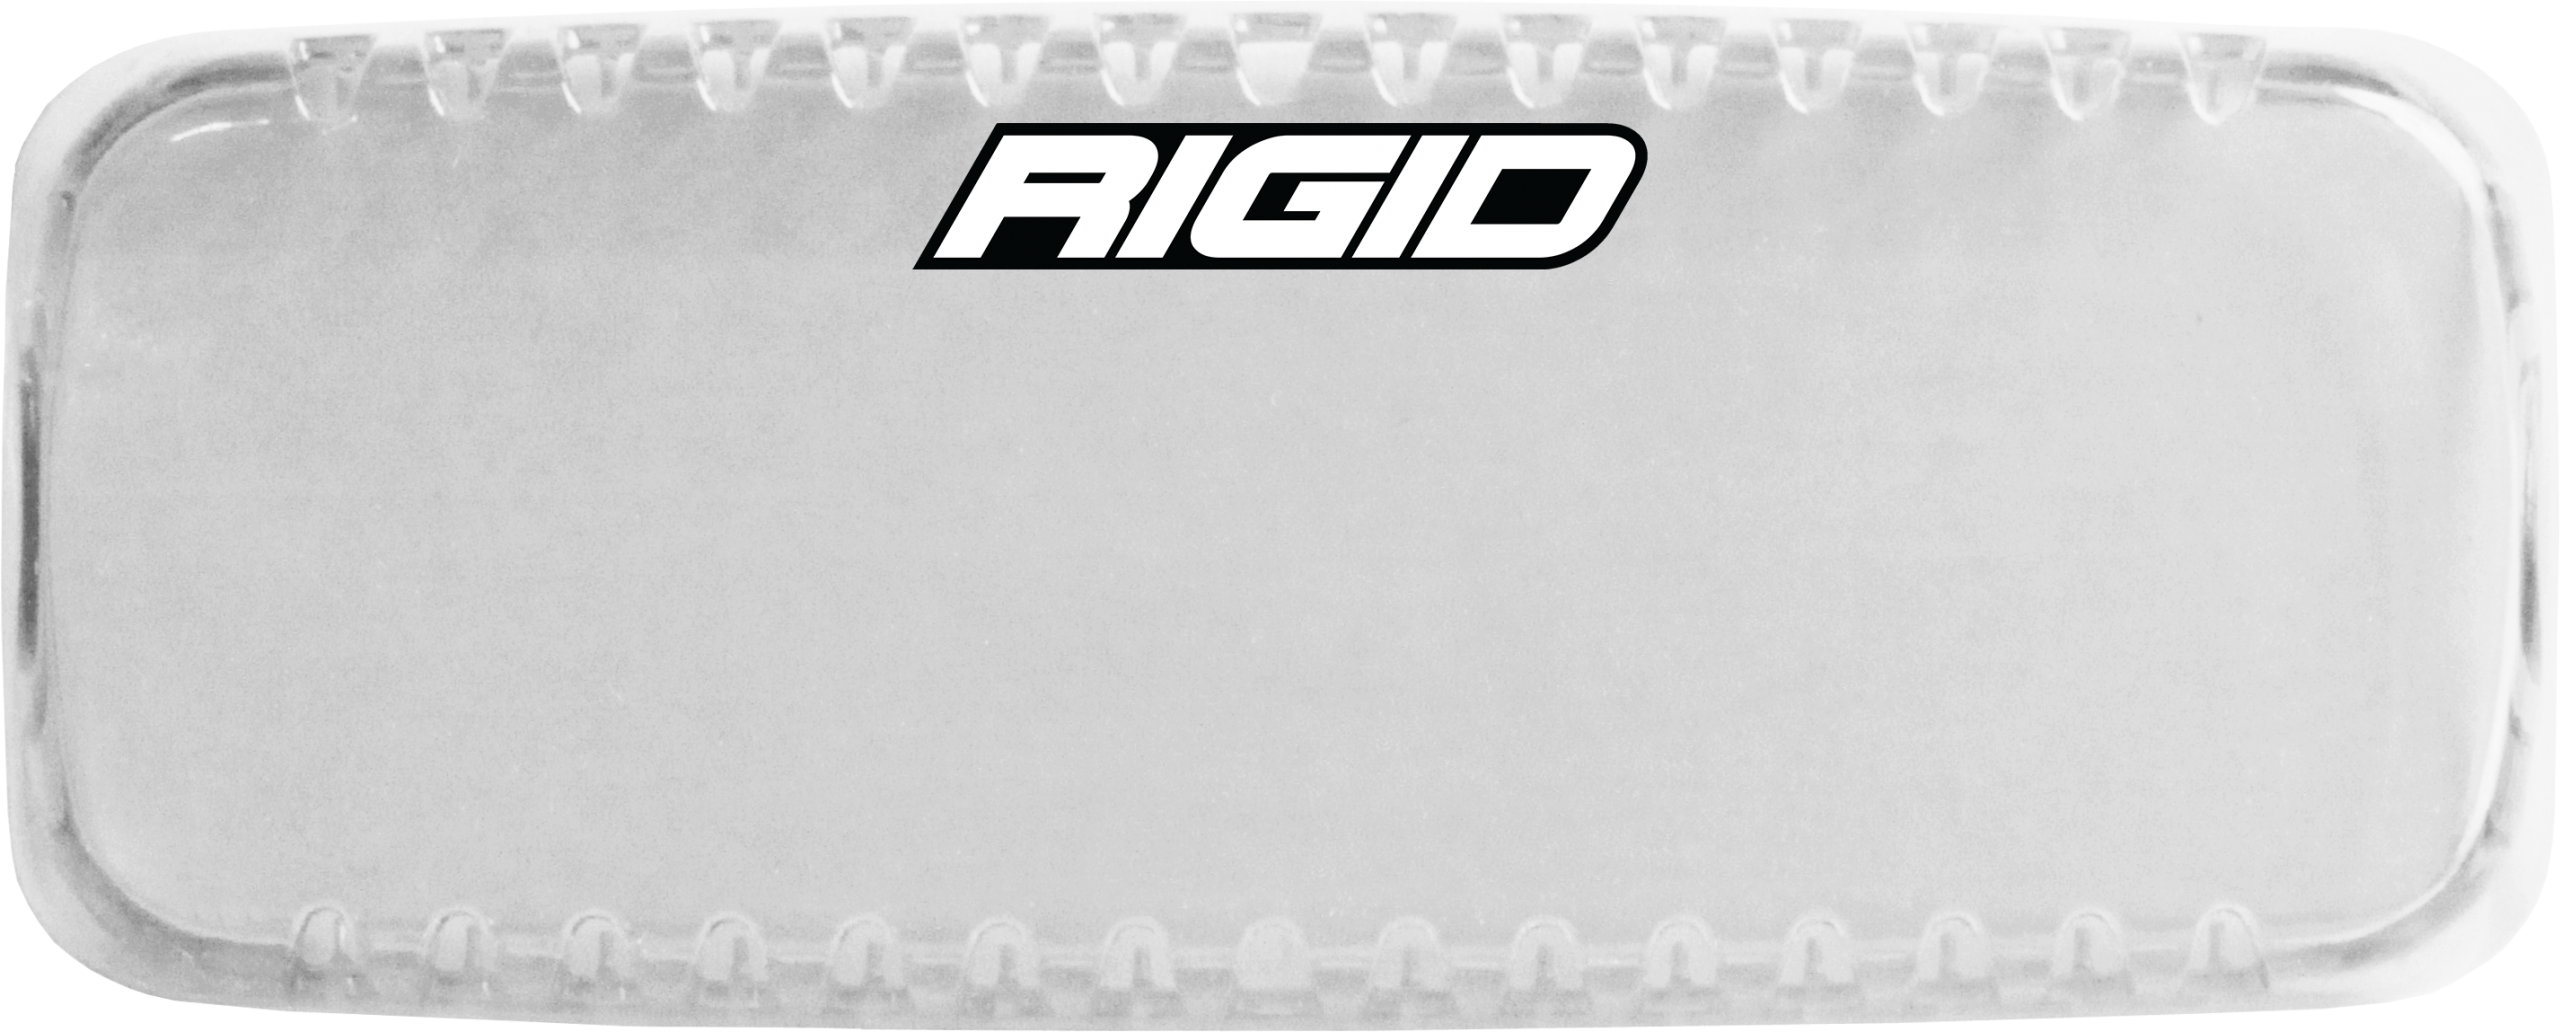 Rigid Industries Light Cover Clear SR-Q Pro